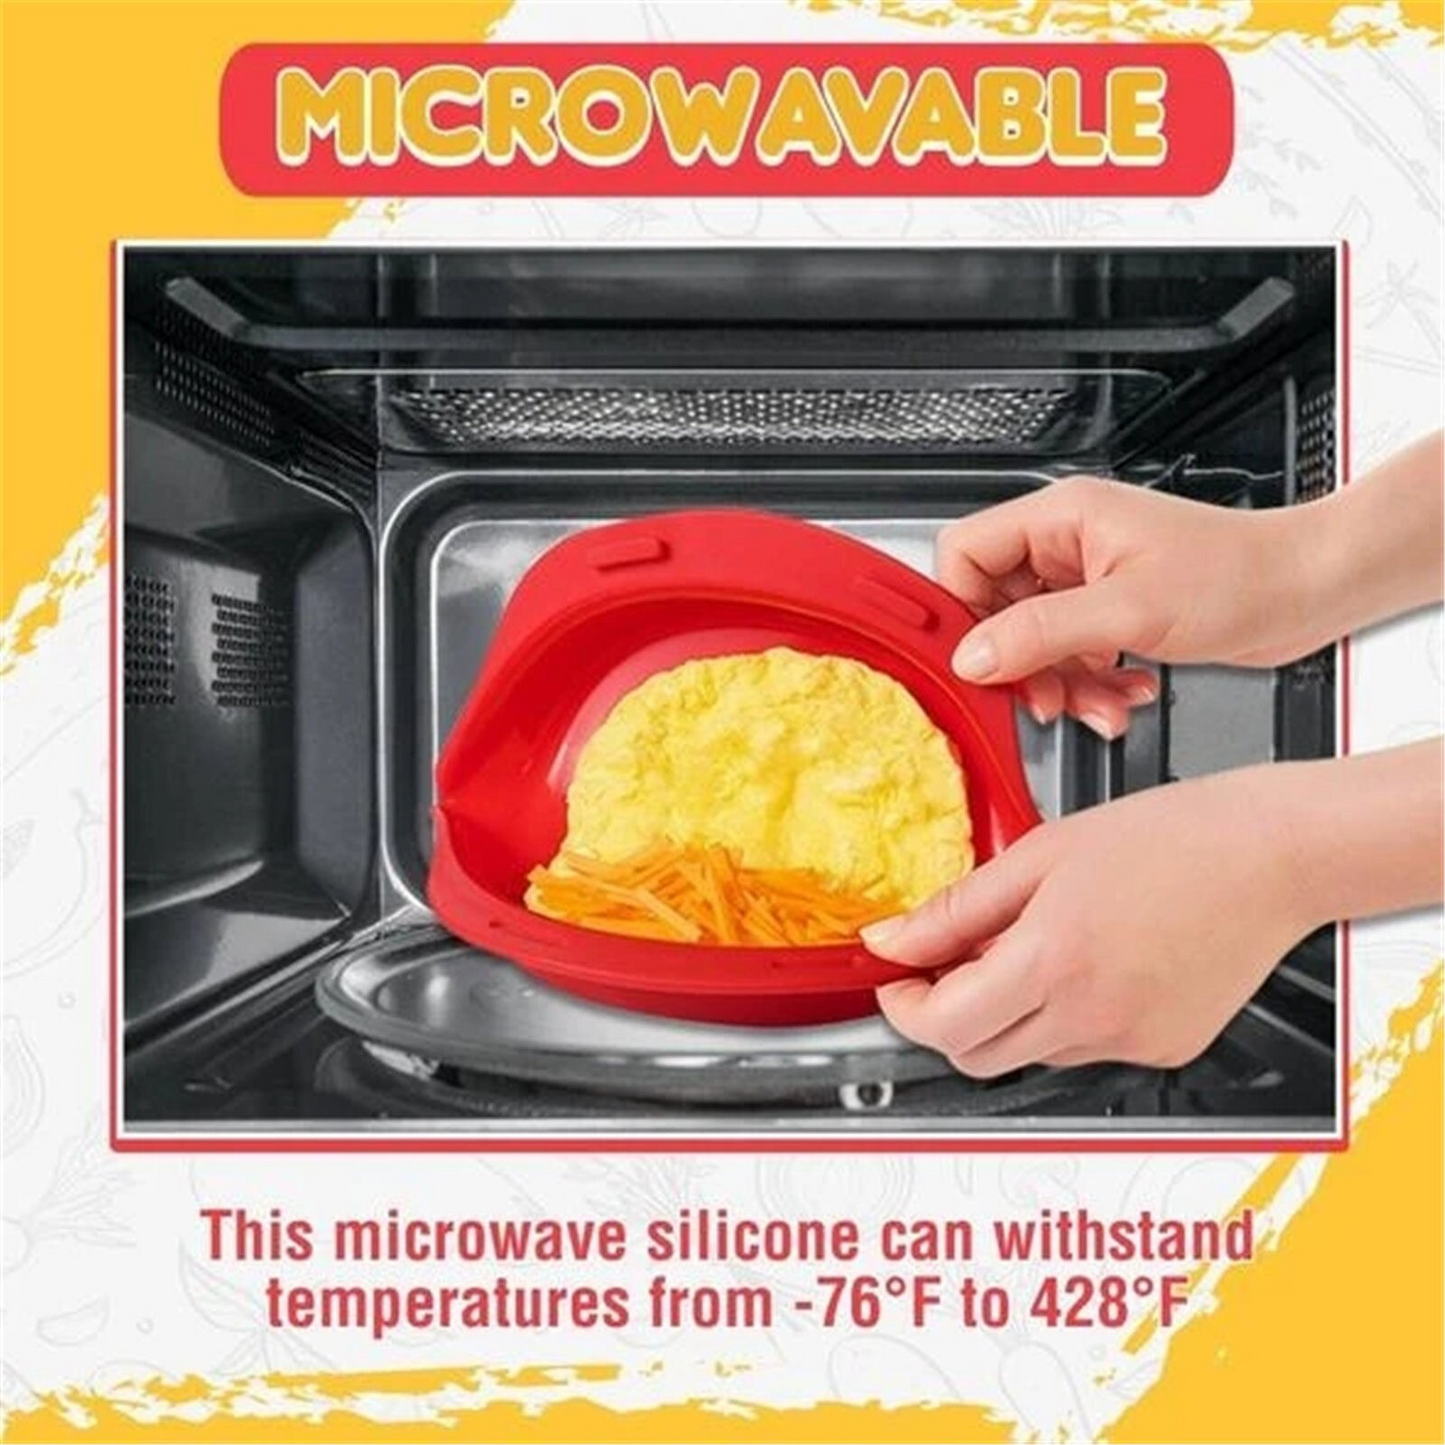 Non-Stick Microwave Omelette Maker